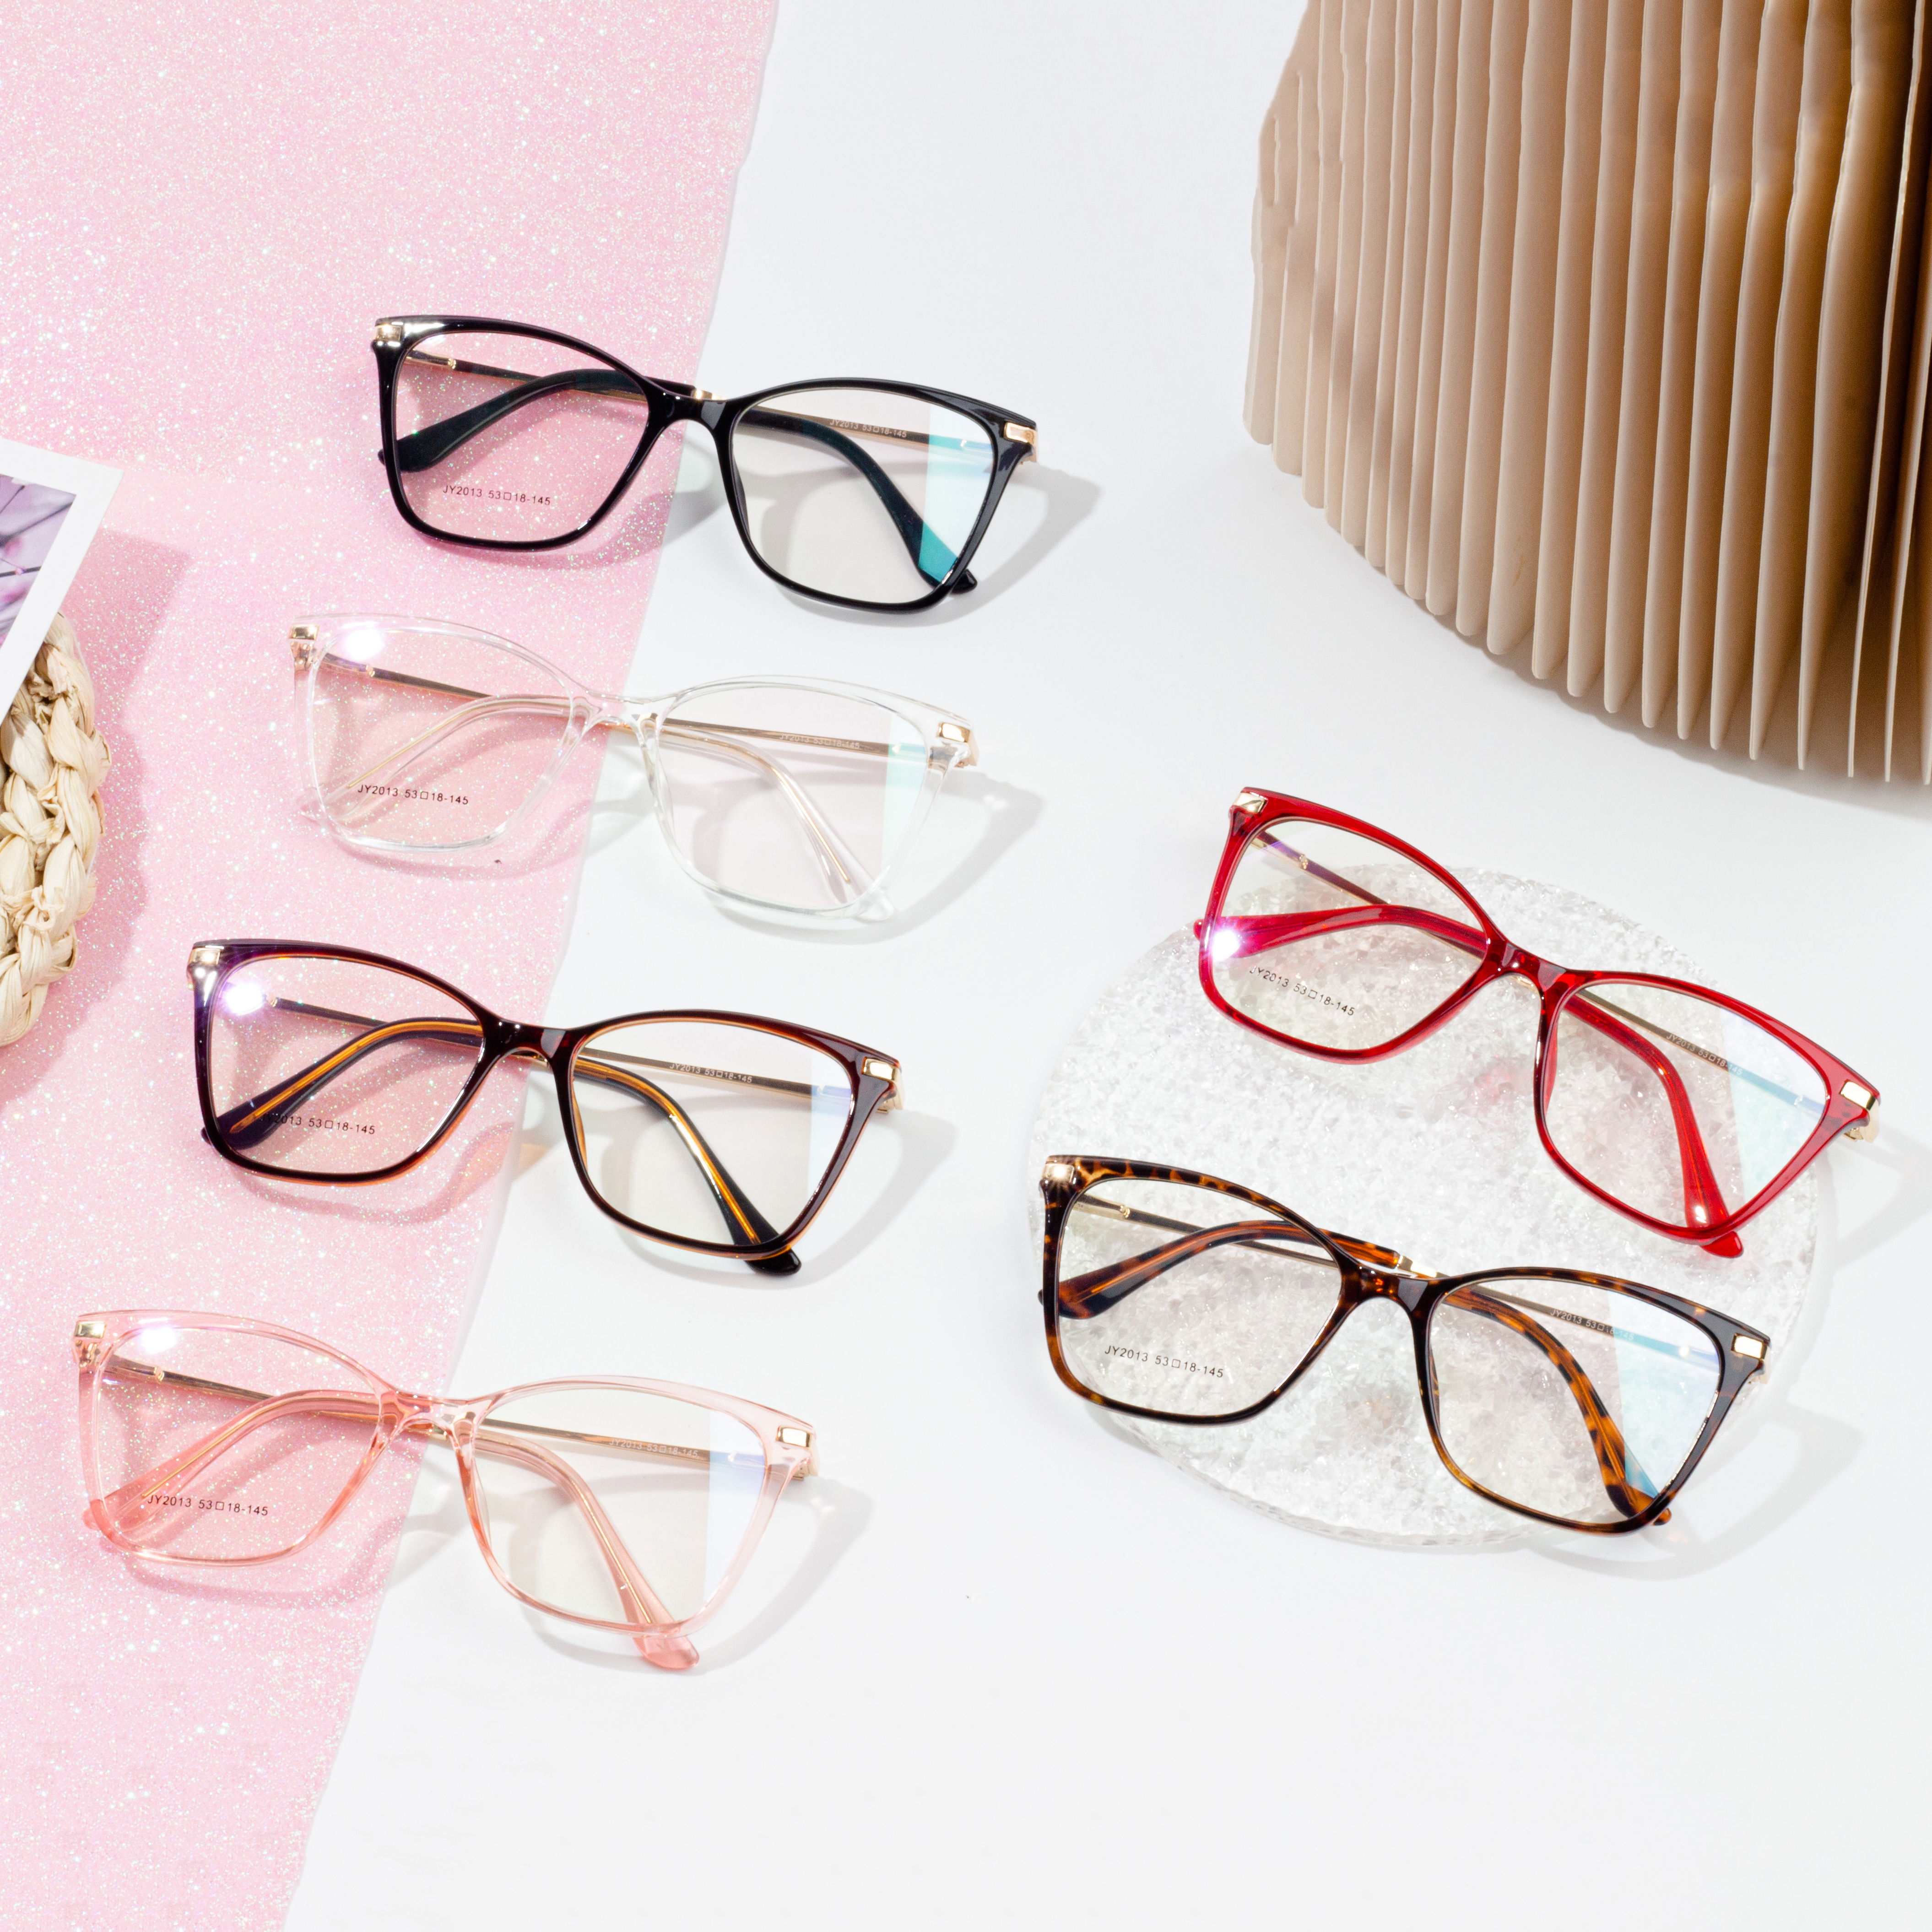 Kacamata fashion bingkai optik wanita